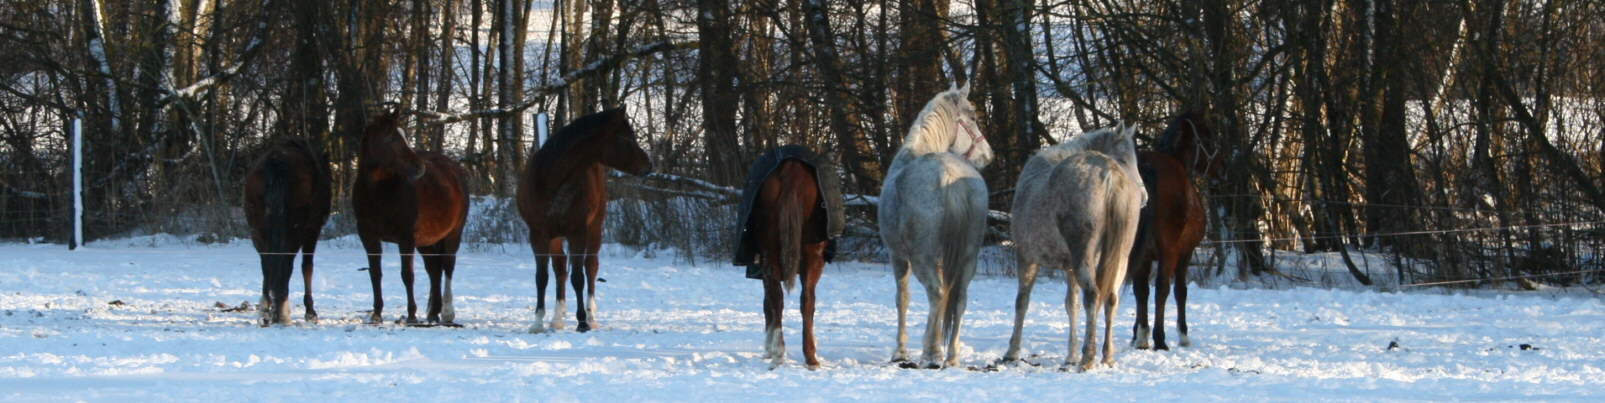 Stutenherde Classic Russian Arabians im Winter